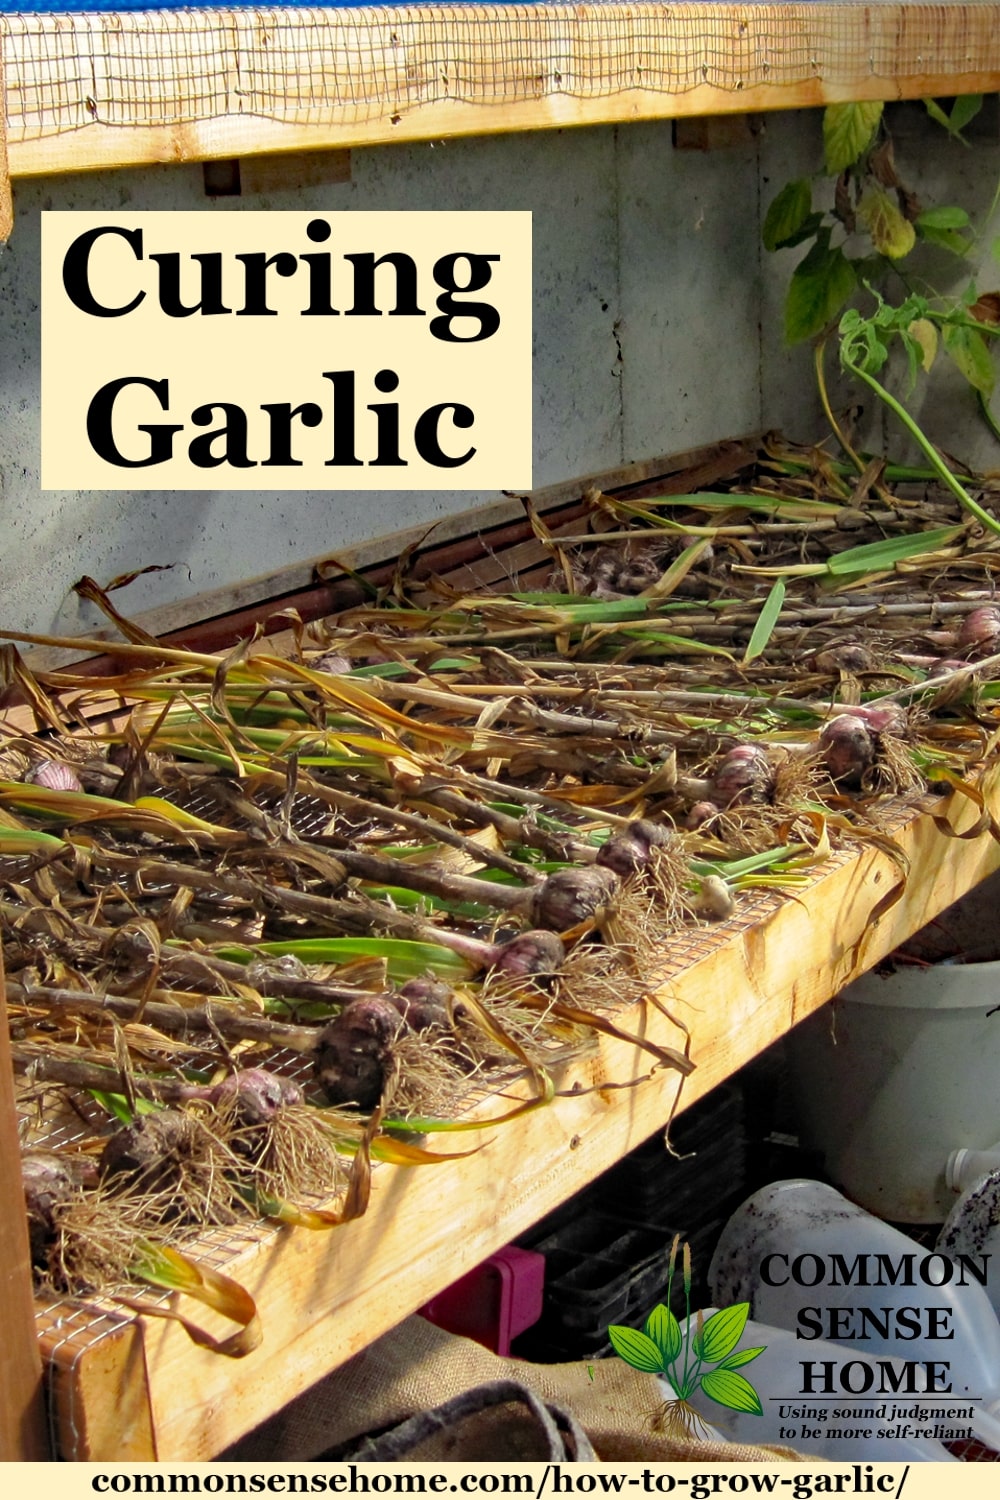 Curing garlic